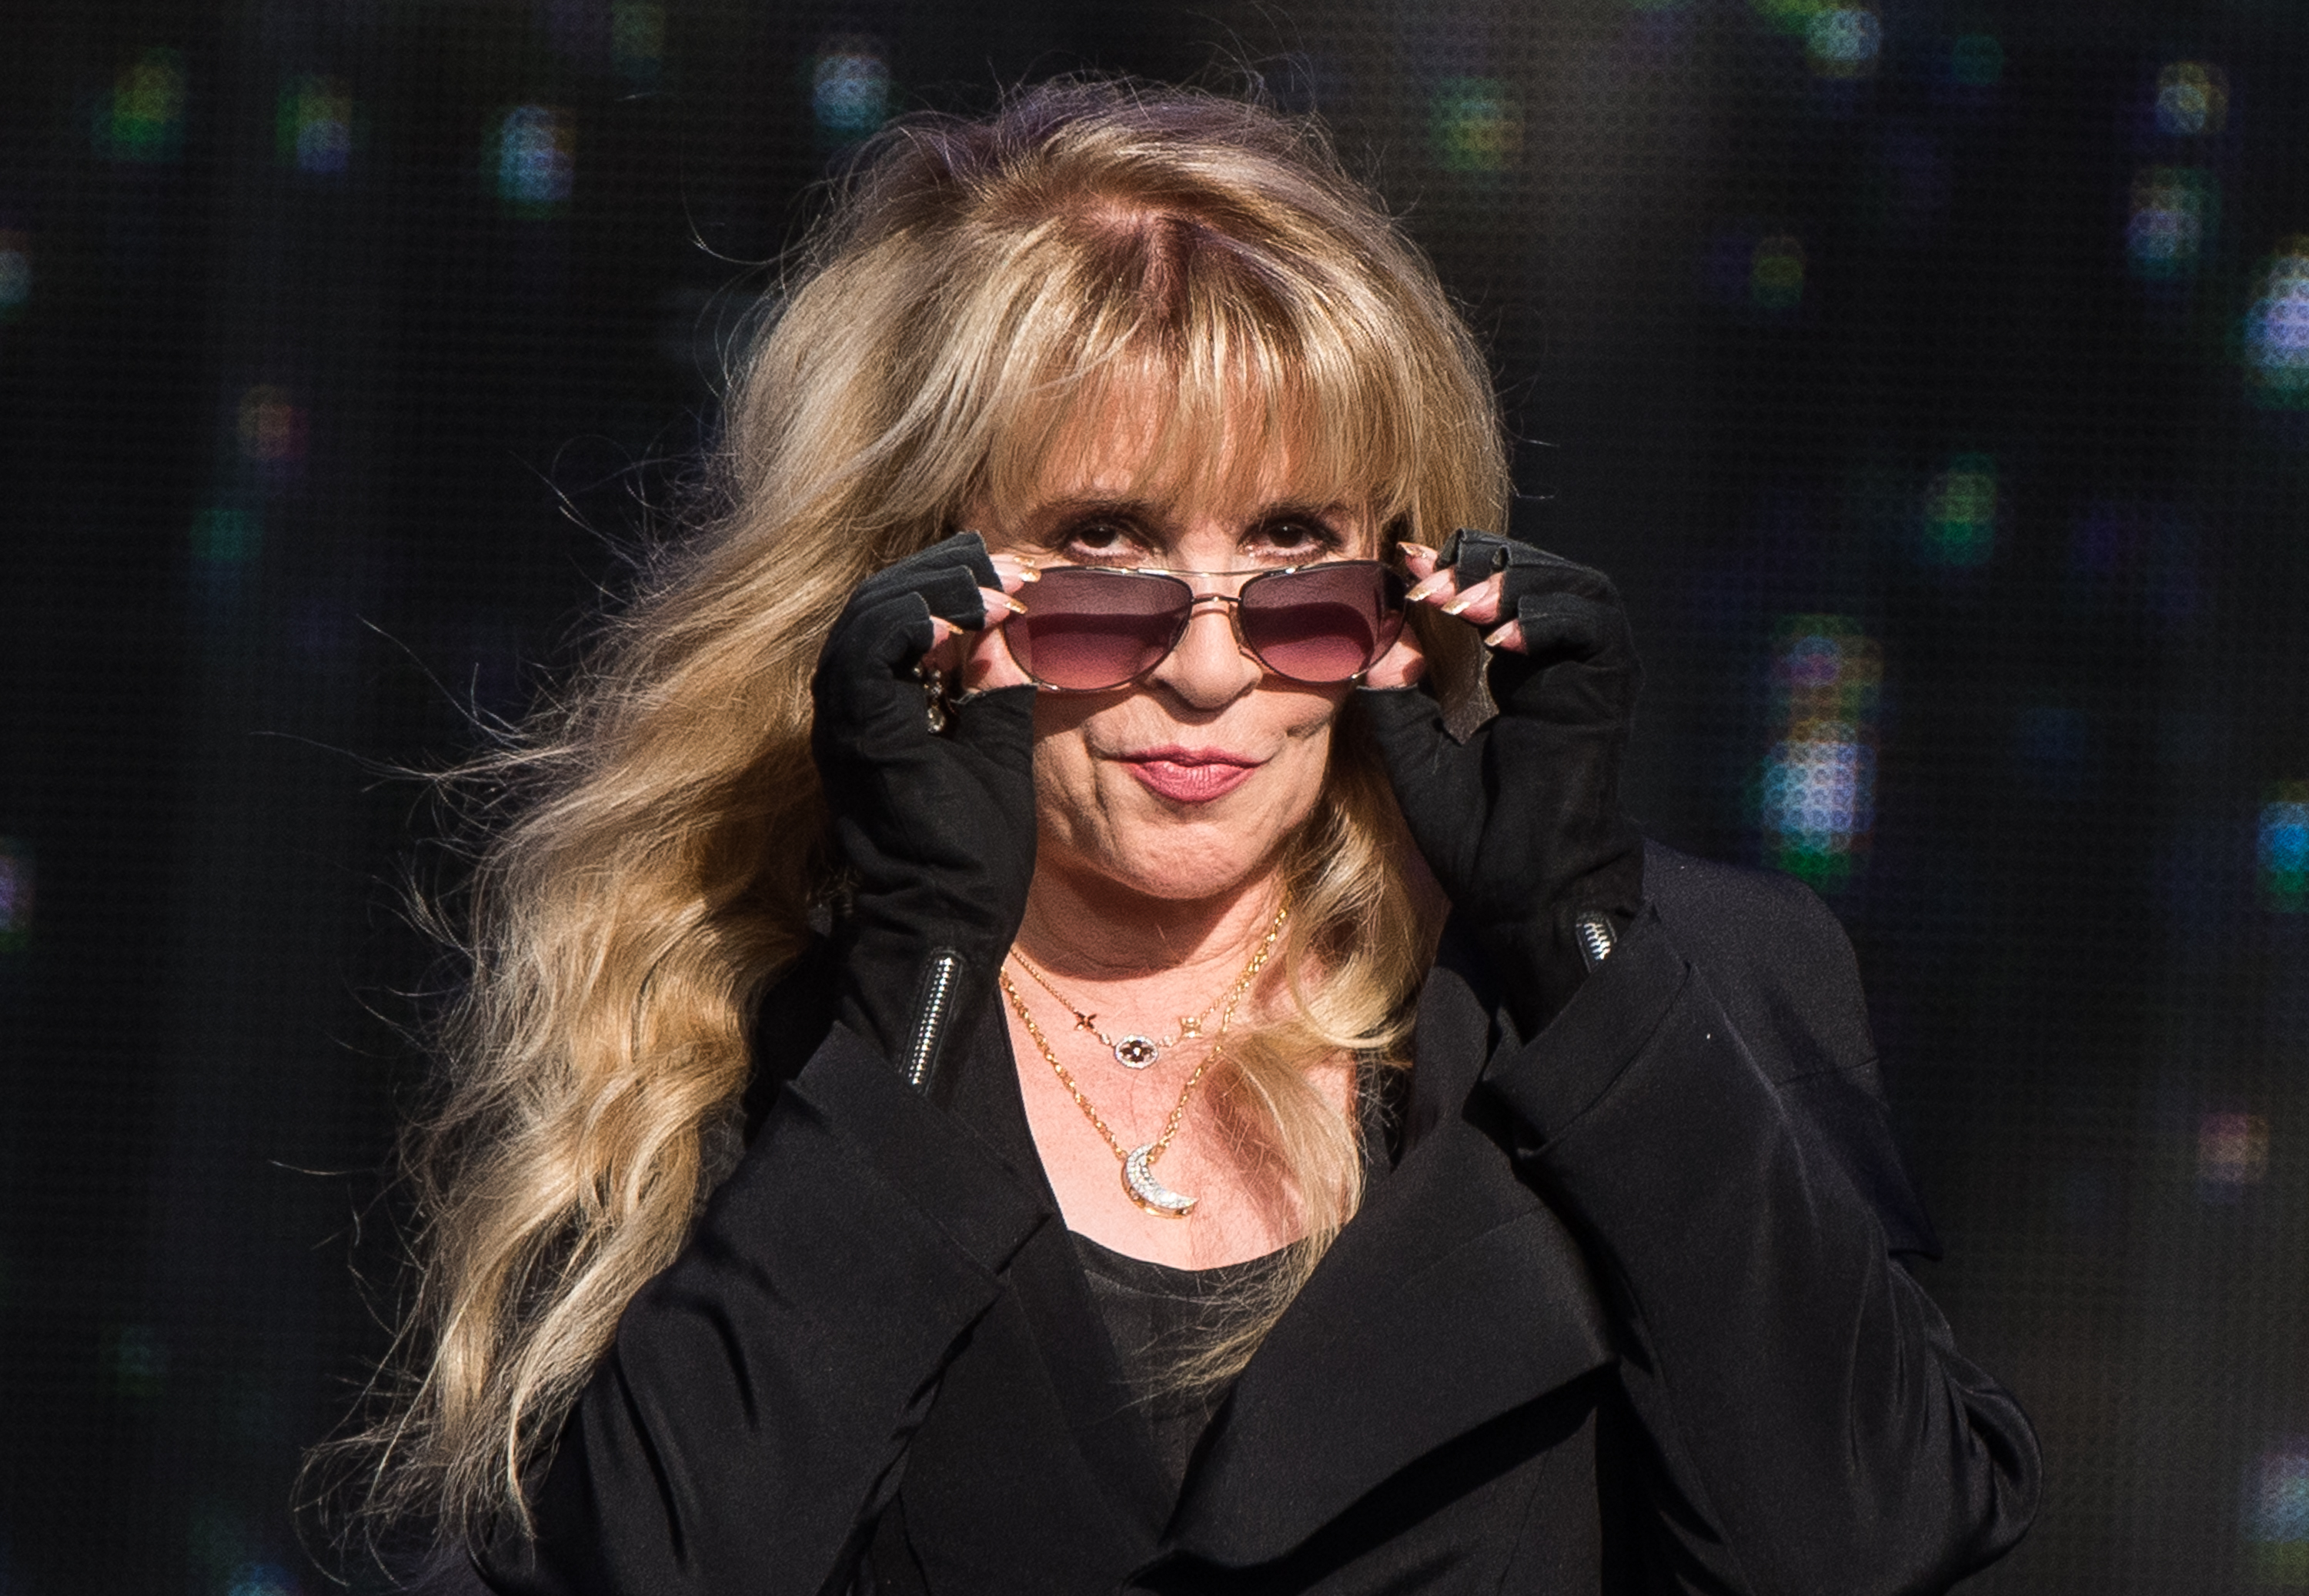 Stevie Nicks wears a black jacket, black fingerless gloves, and sunglasses.